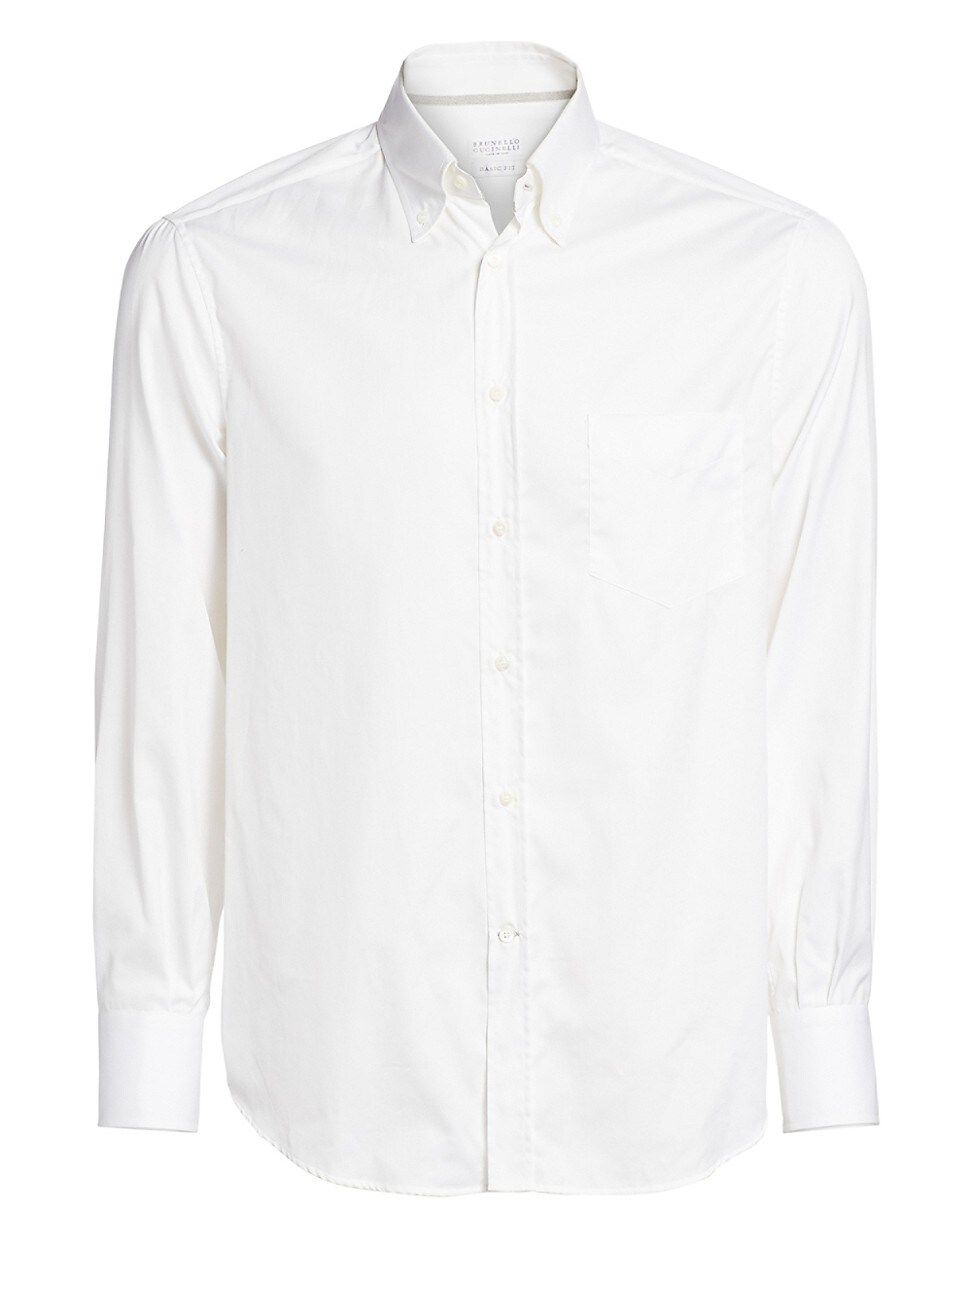 Brunello Cucinelli Men's Solid White Button-Down Shirt - White - Size XL | Saks Fifth Avenue